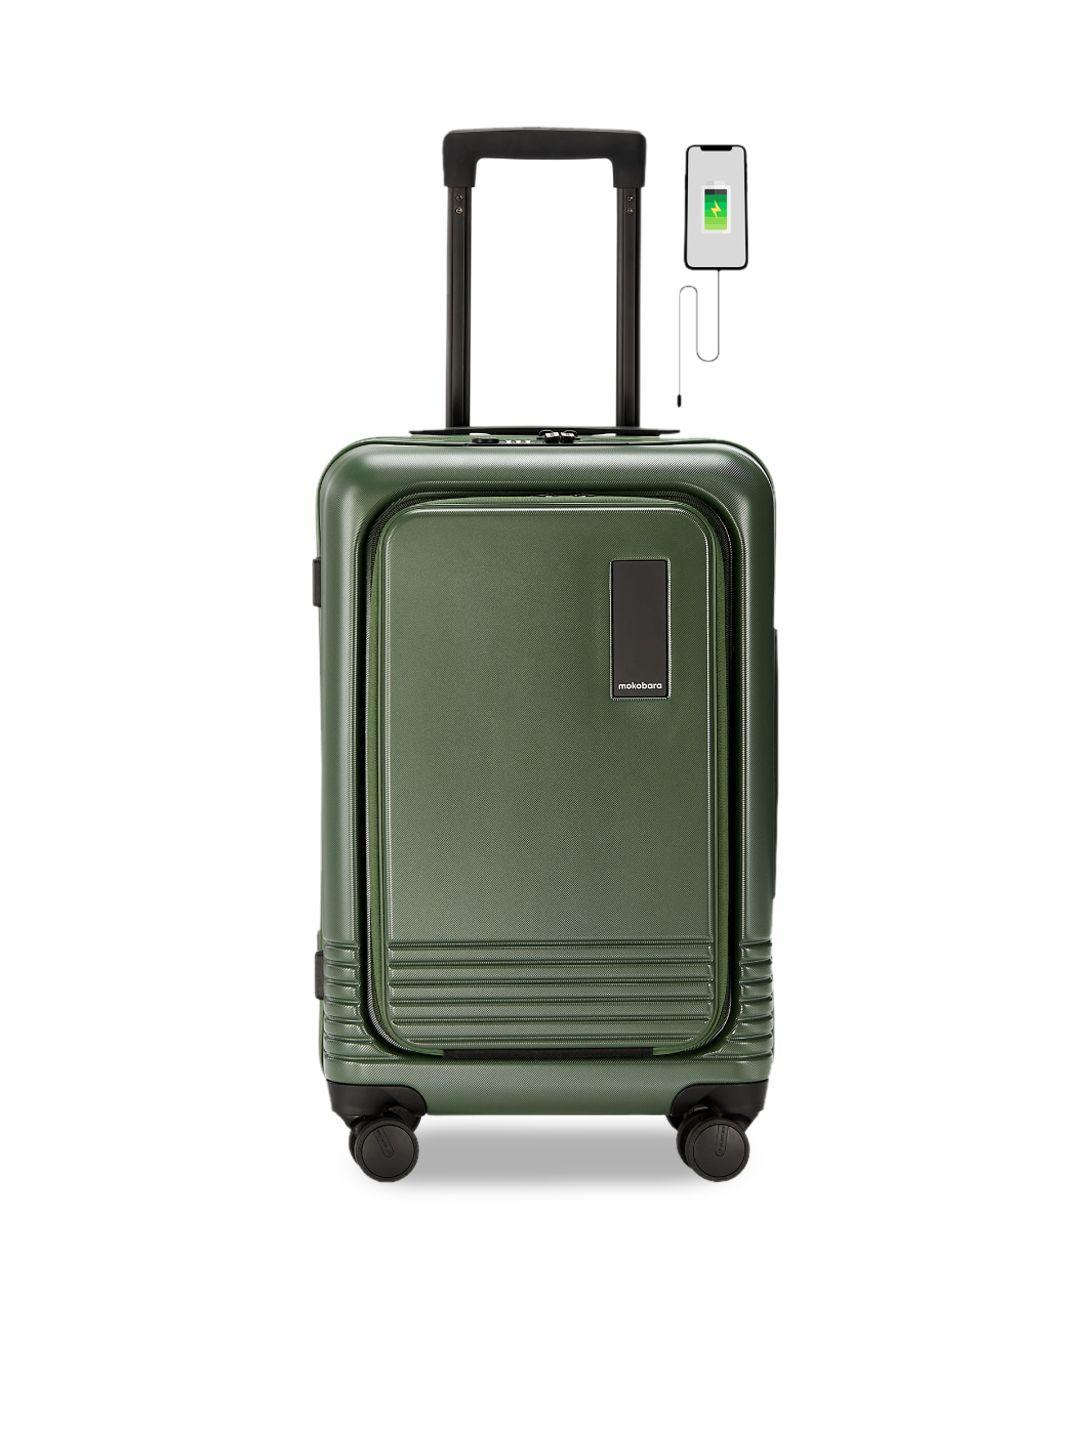 mokobara hard-sided cabin trolley suitcase